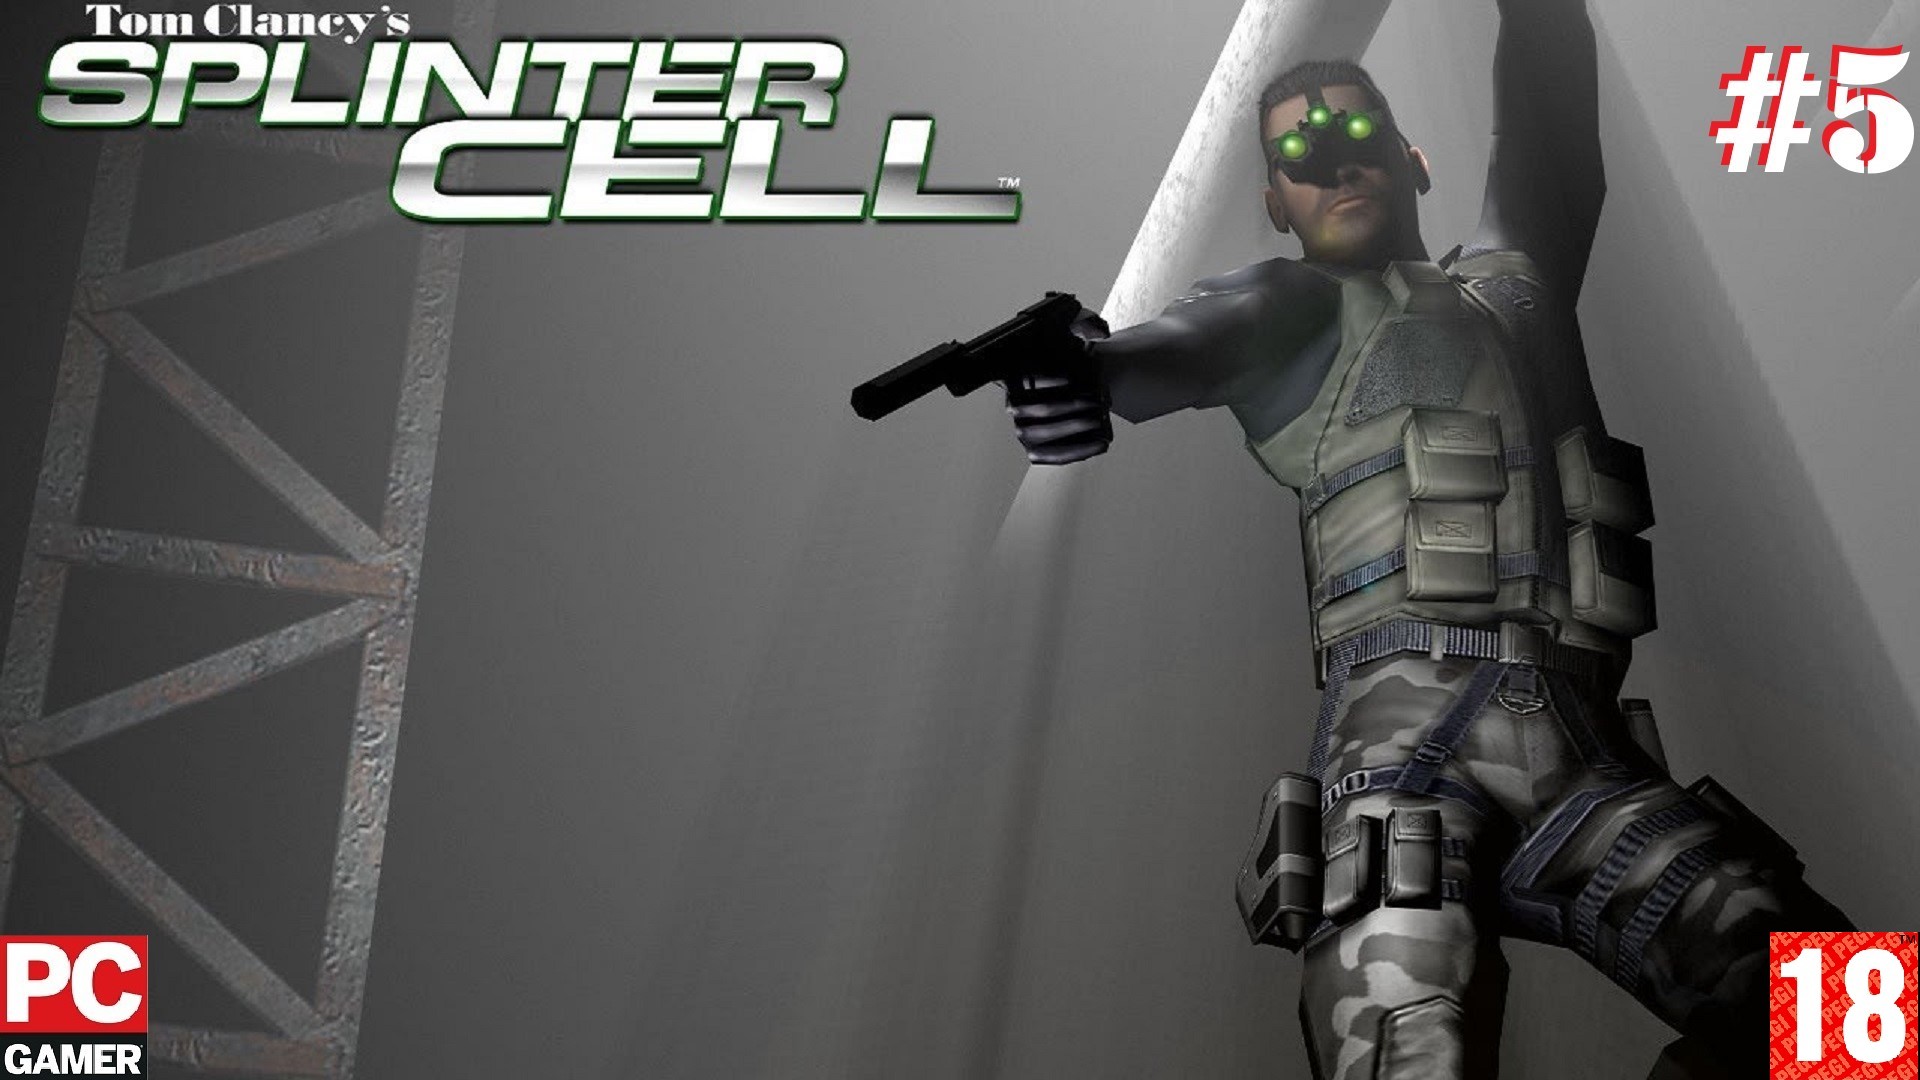 Сплинтер селл 1. Сэм Фишер Splinter Cell. Сэм Фишер 2002. Tom Clancy s Splinter Cell 2002. Сэм Фишер Splinter Cell 1.